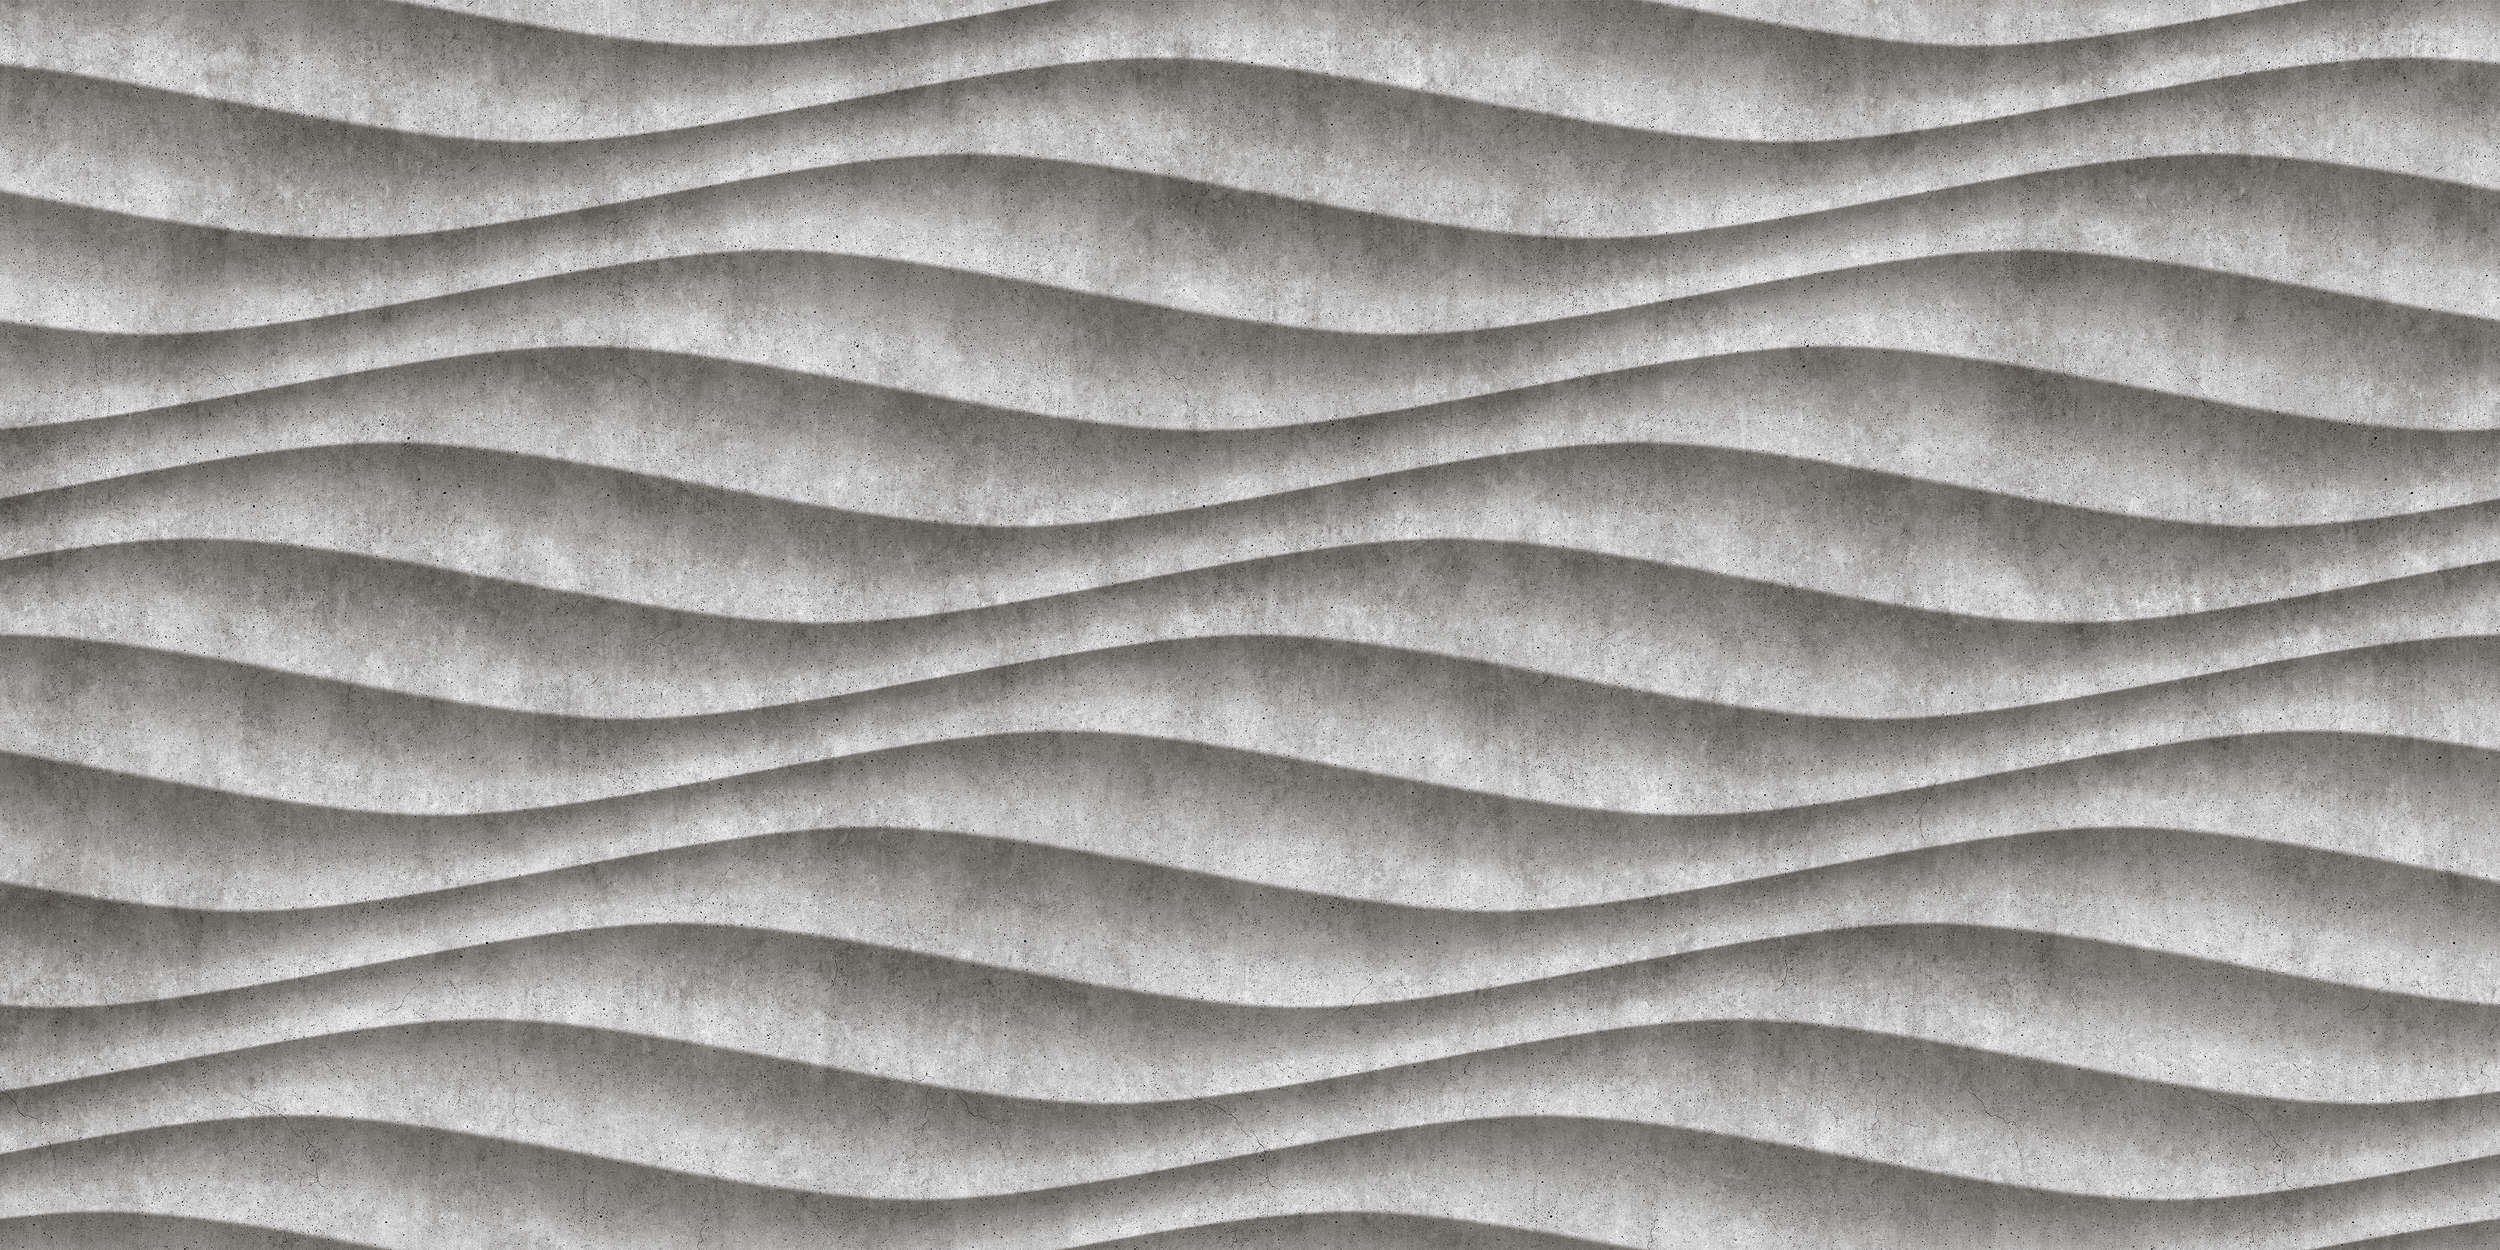             Canyon 2 - Cool 3D Concrete Waves Onderlaag behang - Grijs, Zwart | Premium Smooth Vliesbehang
        